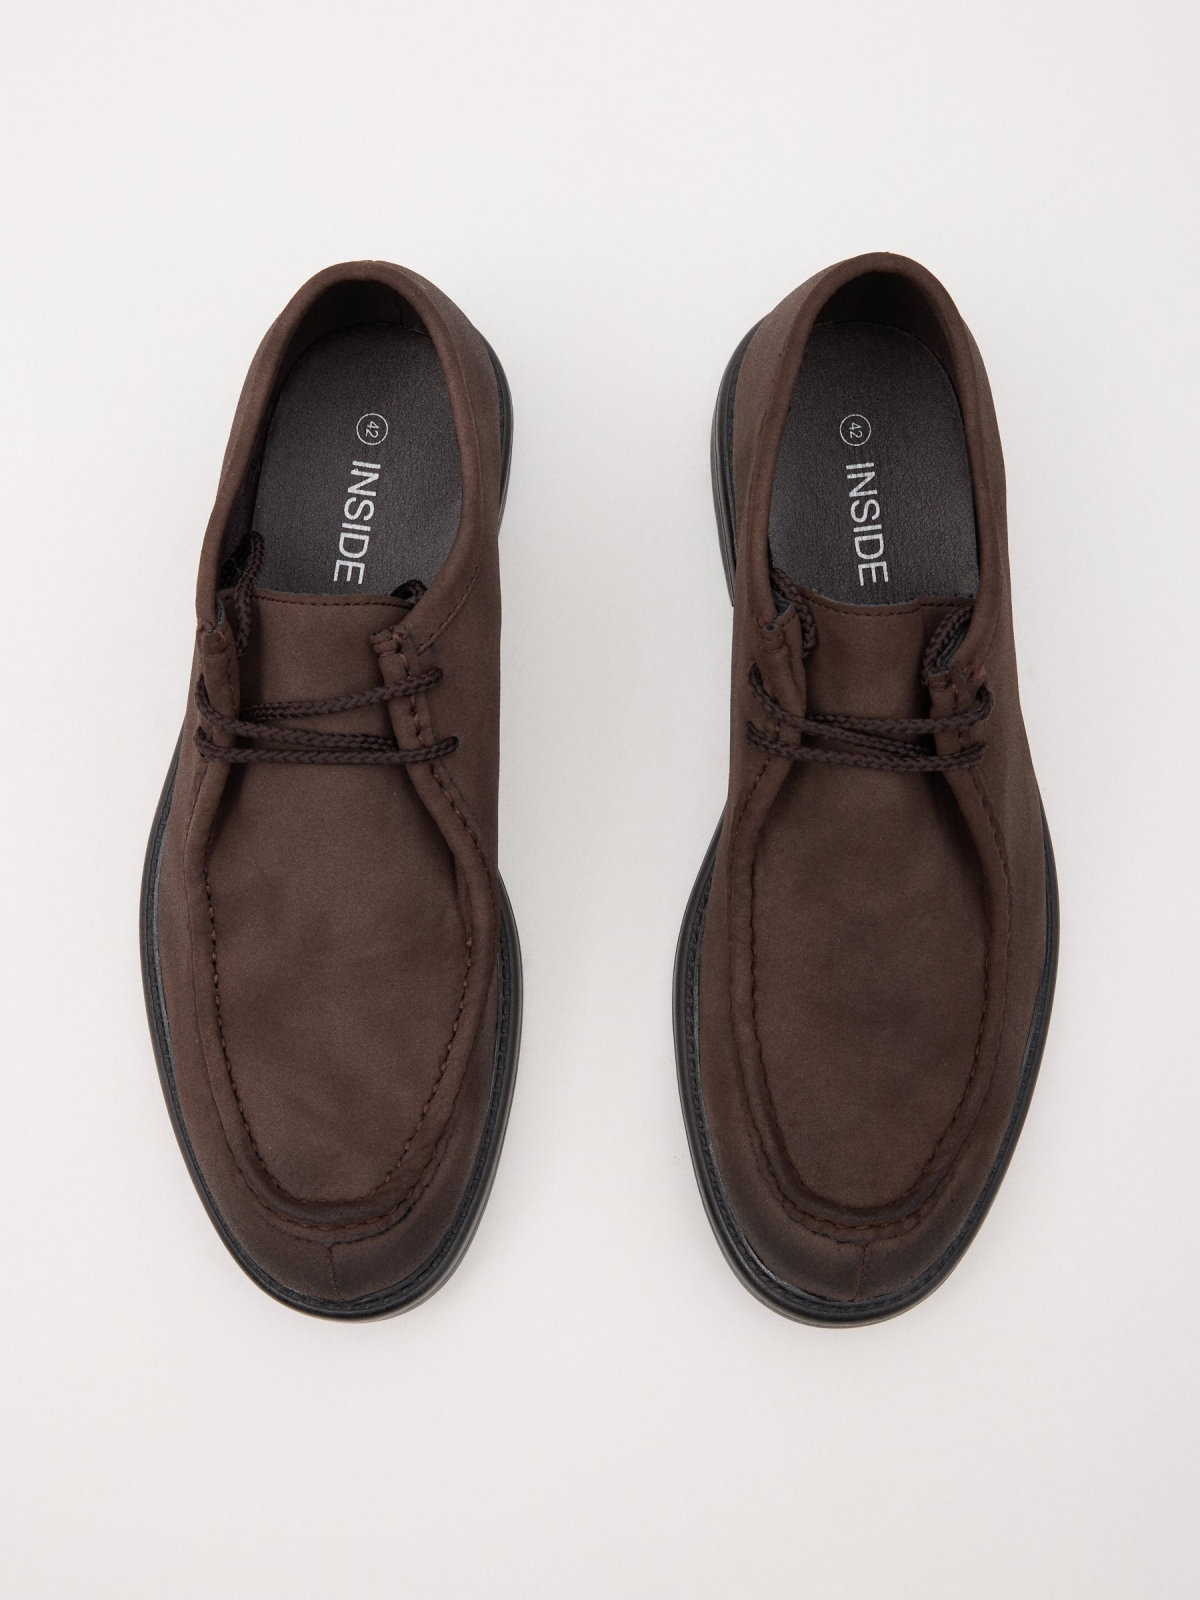 Sapato clássico de brogue marrom escuro vista superior